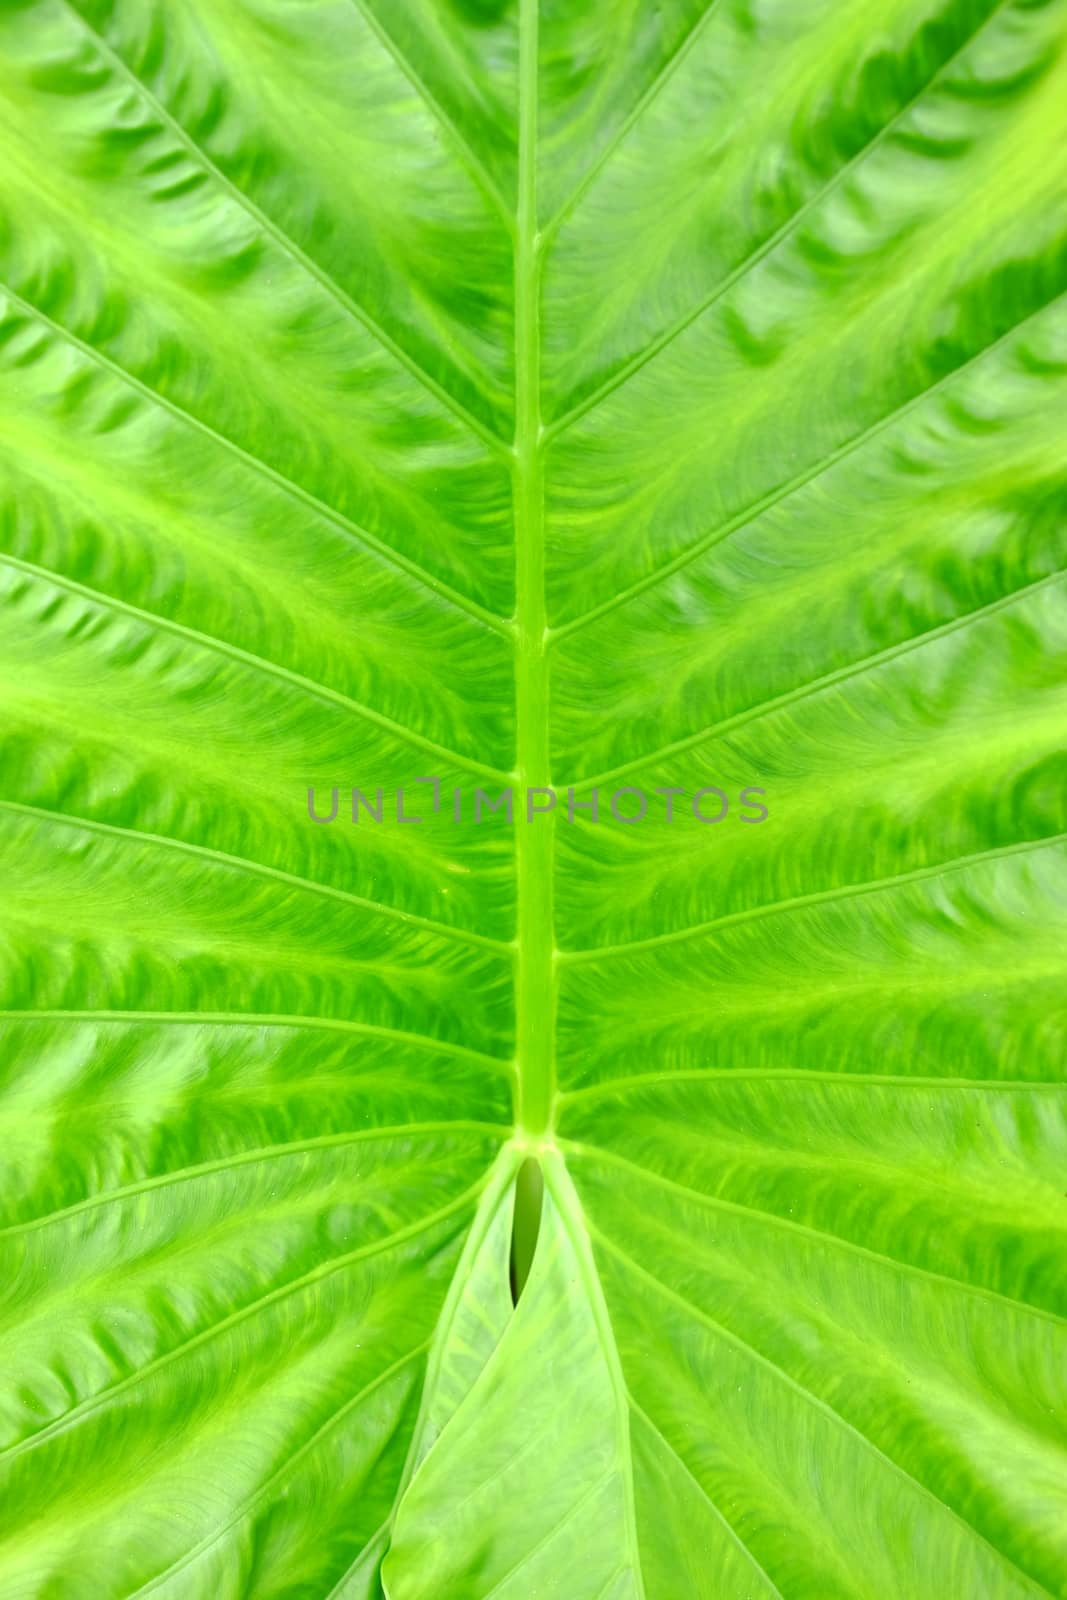 Green Caladium Leaf Background. by mesamong